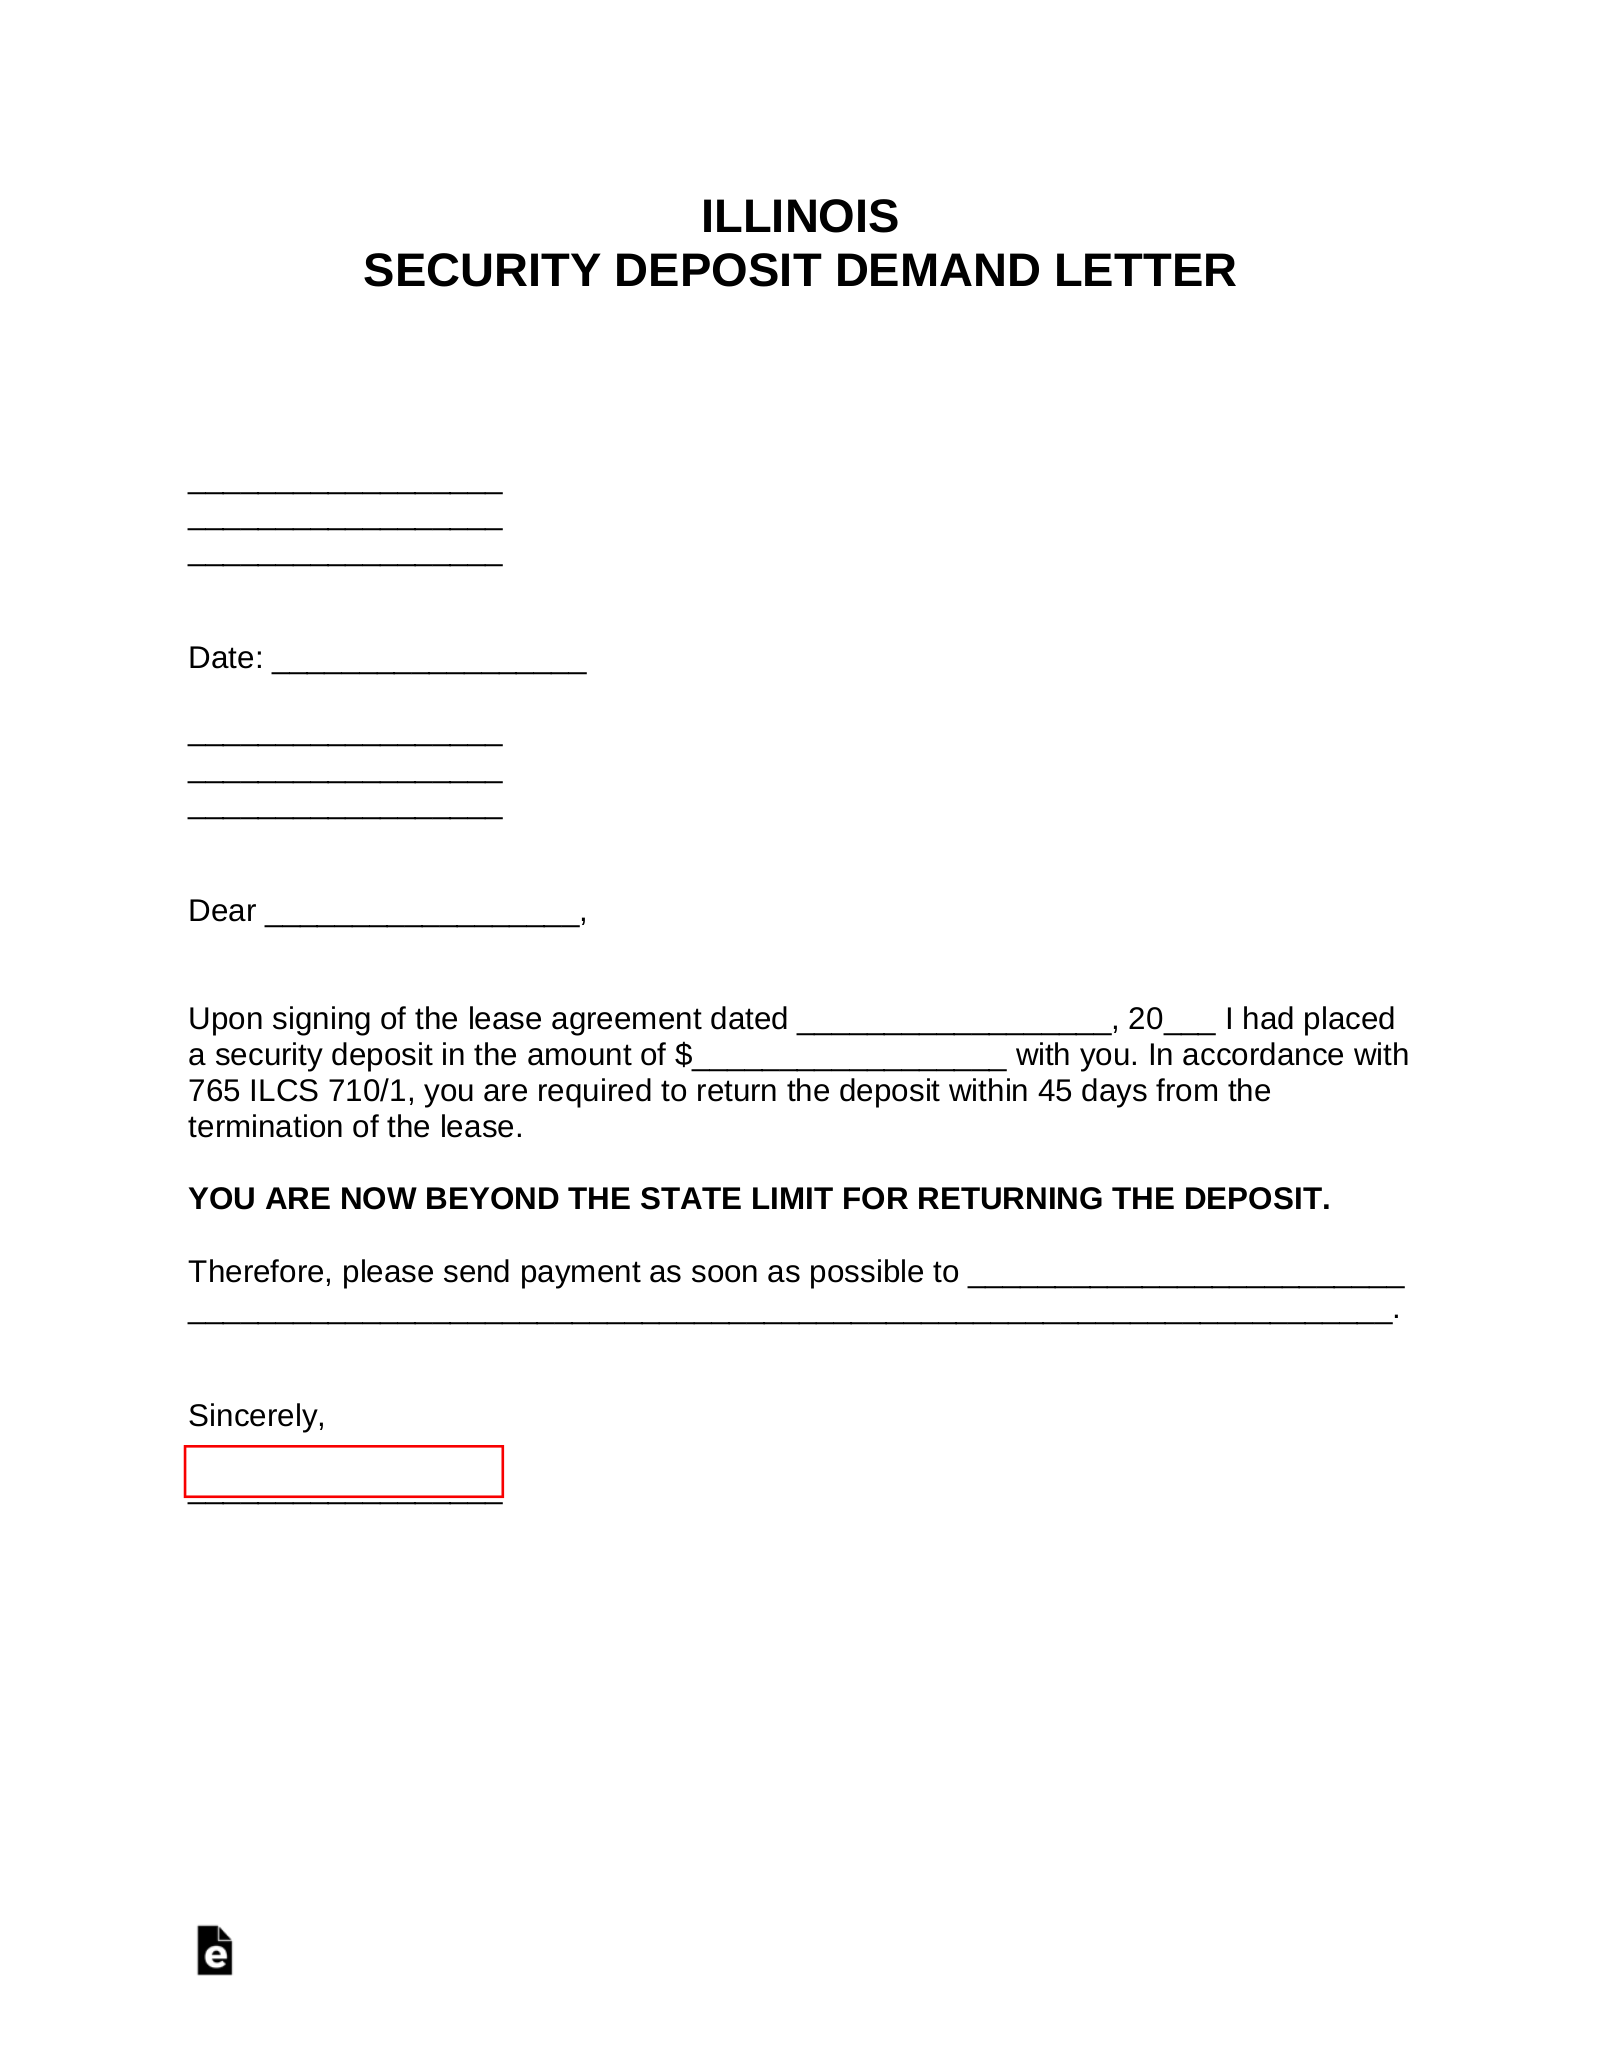 Illinois Security Deposit Demand Letter